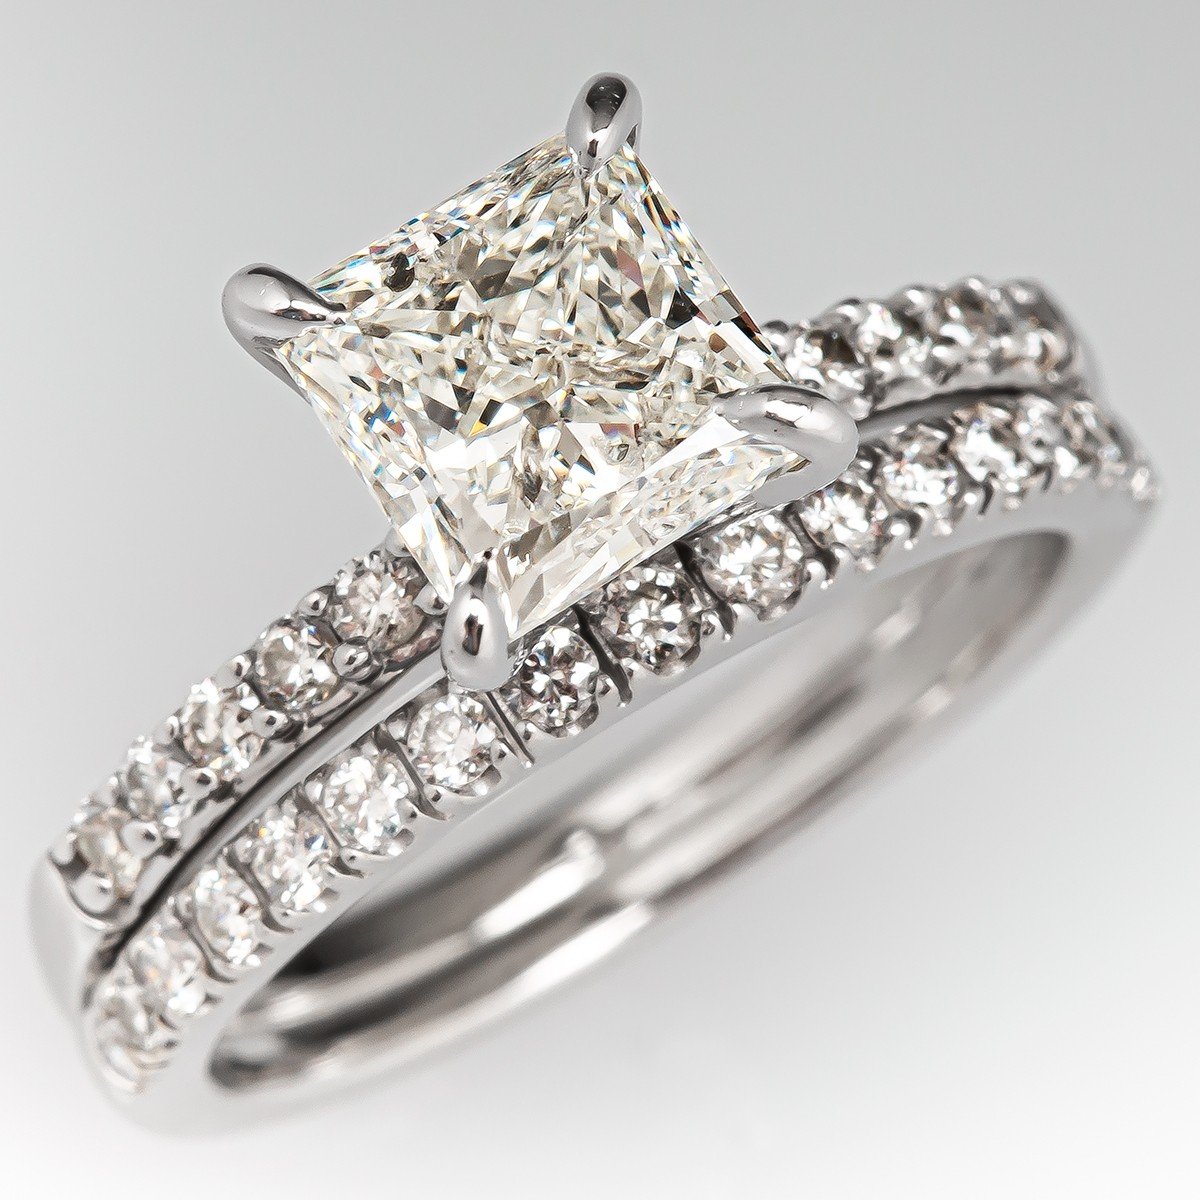 Buy 1.5 Carat Princess Cut Diamond Engagement Ring 14K White Gold Ring Real  Natural Diamond D VS1 Beautiful Proposal Ring Online in India - Etsy